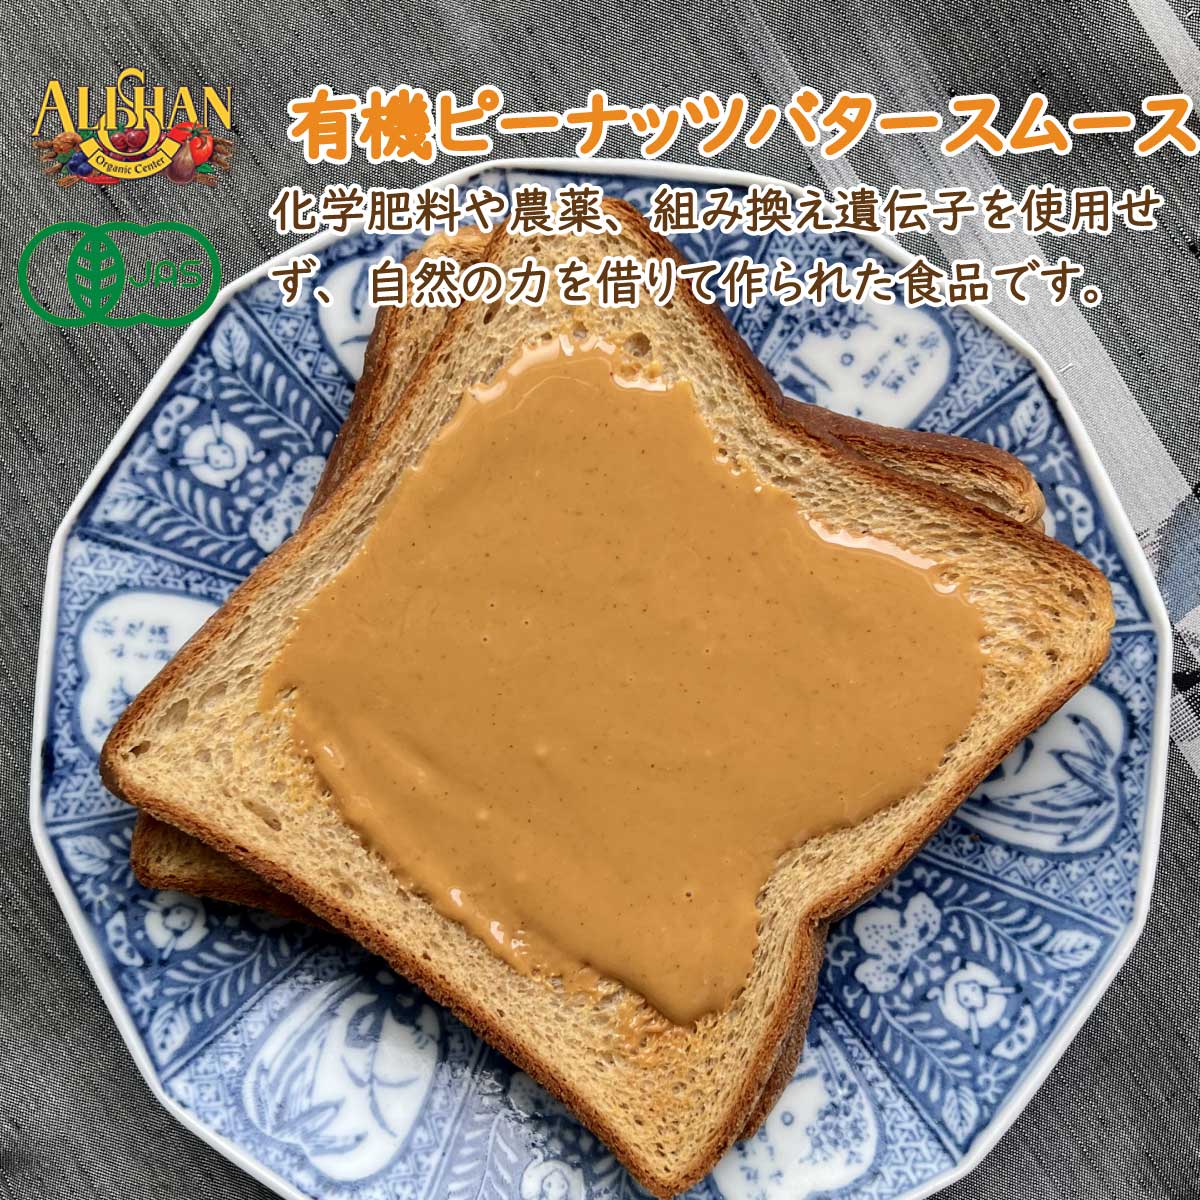 a Lisa n peanuts butter smooth have machine peanuts butter 454g 3 piece organic meal salt Zero protein vitamin E niacin 